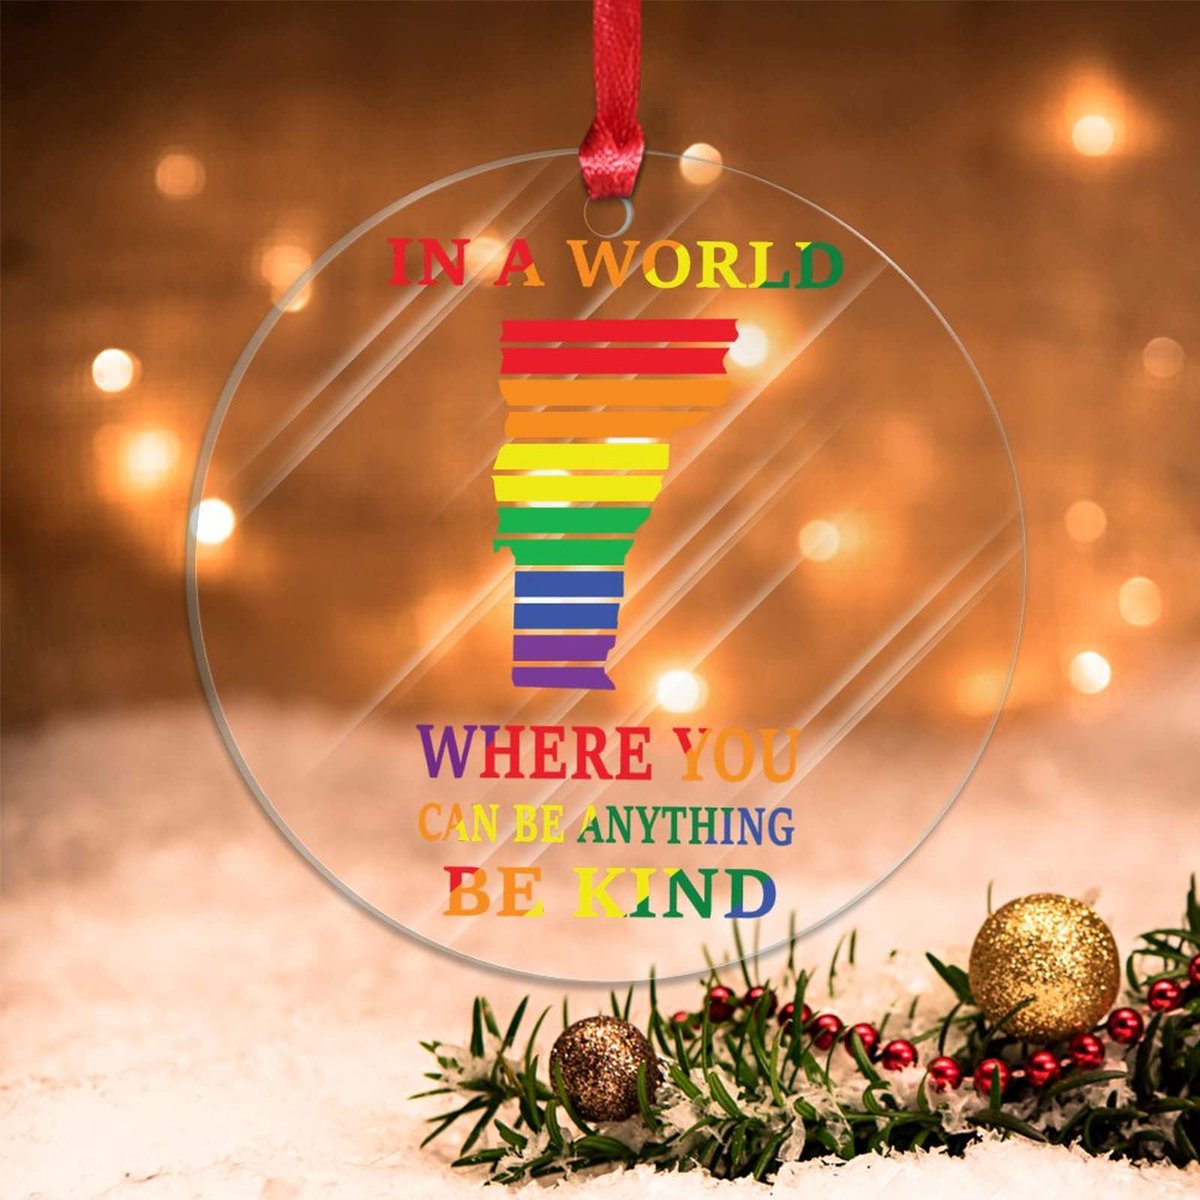 #diversity #loveislove #betruetoyourself #dukannstallessein #beproudofyou #gaychristmas